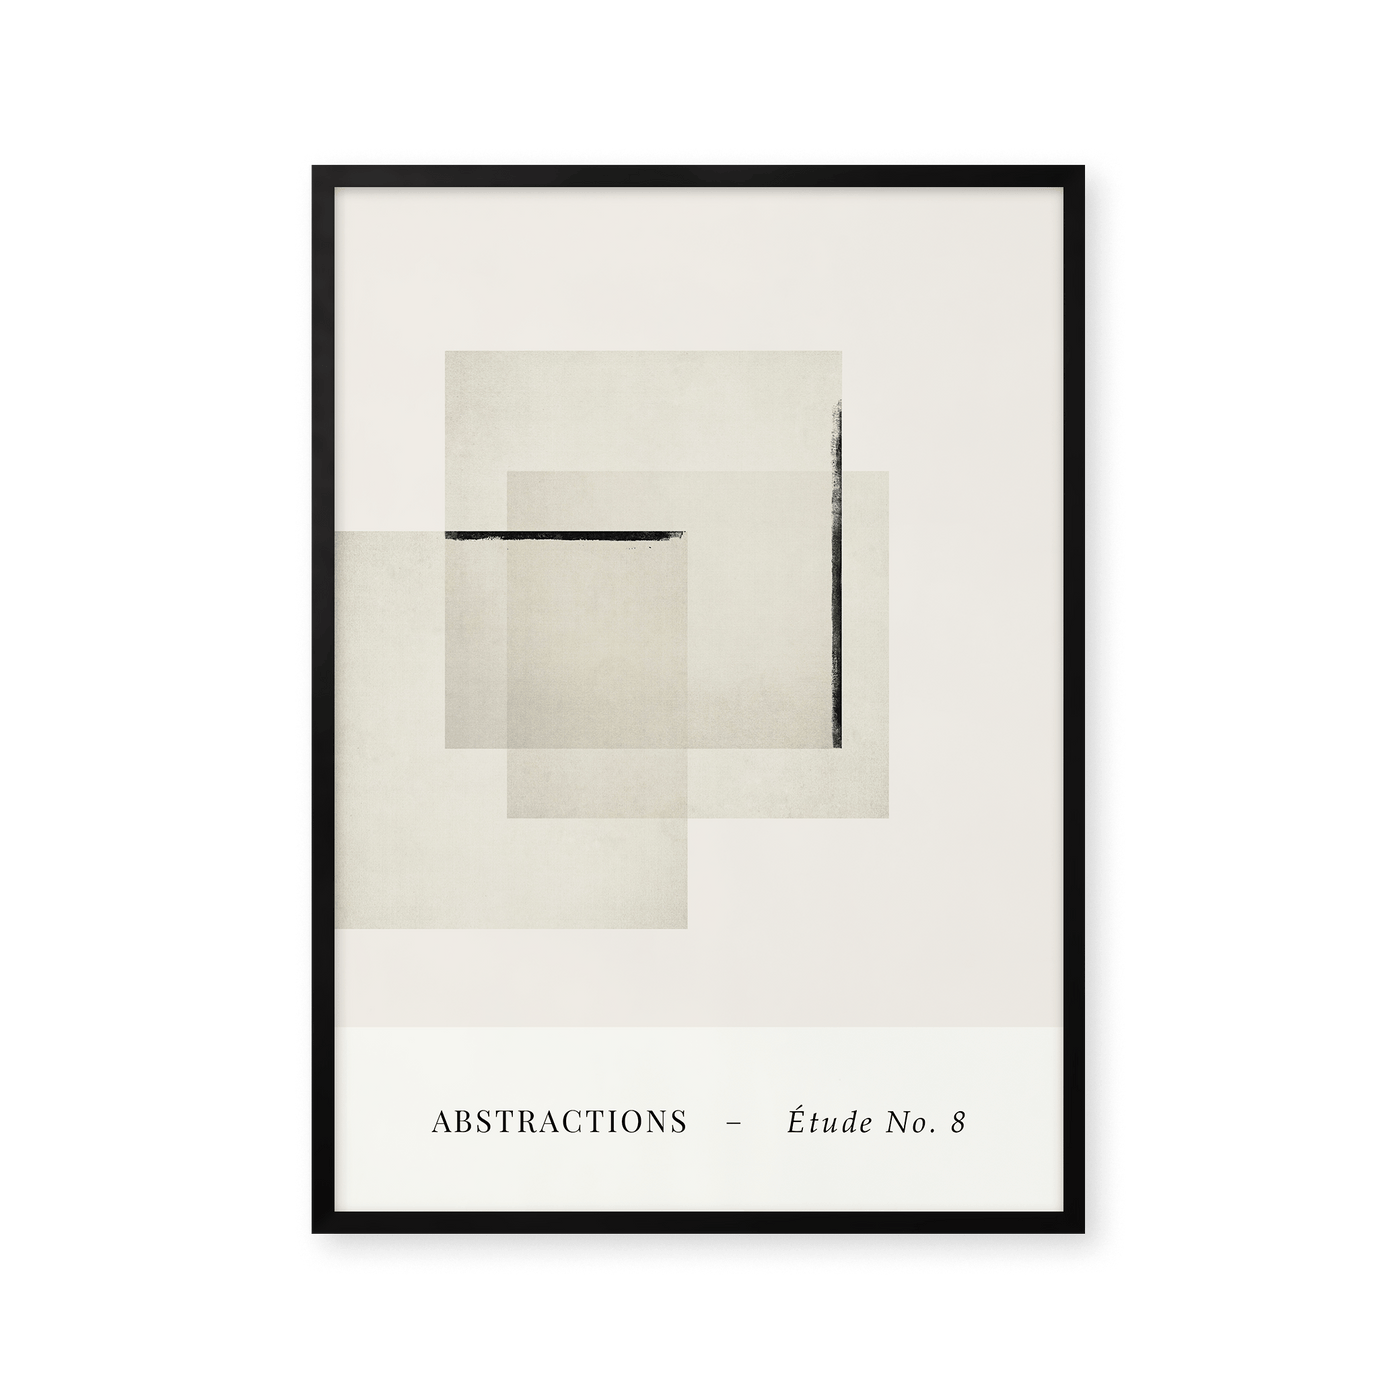 Abstractions - Étude No. 8